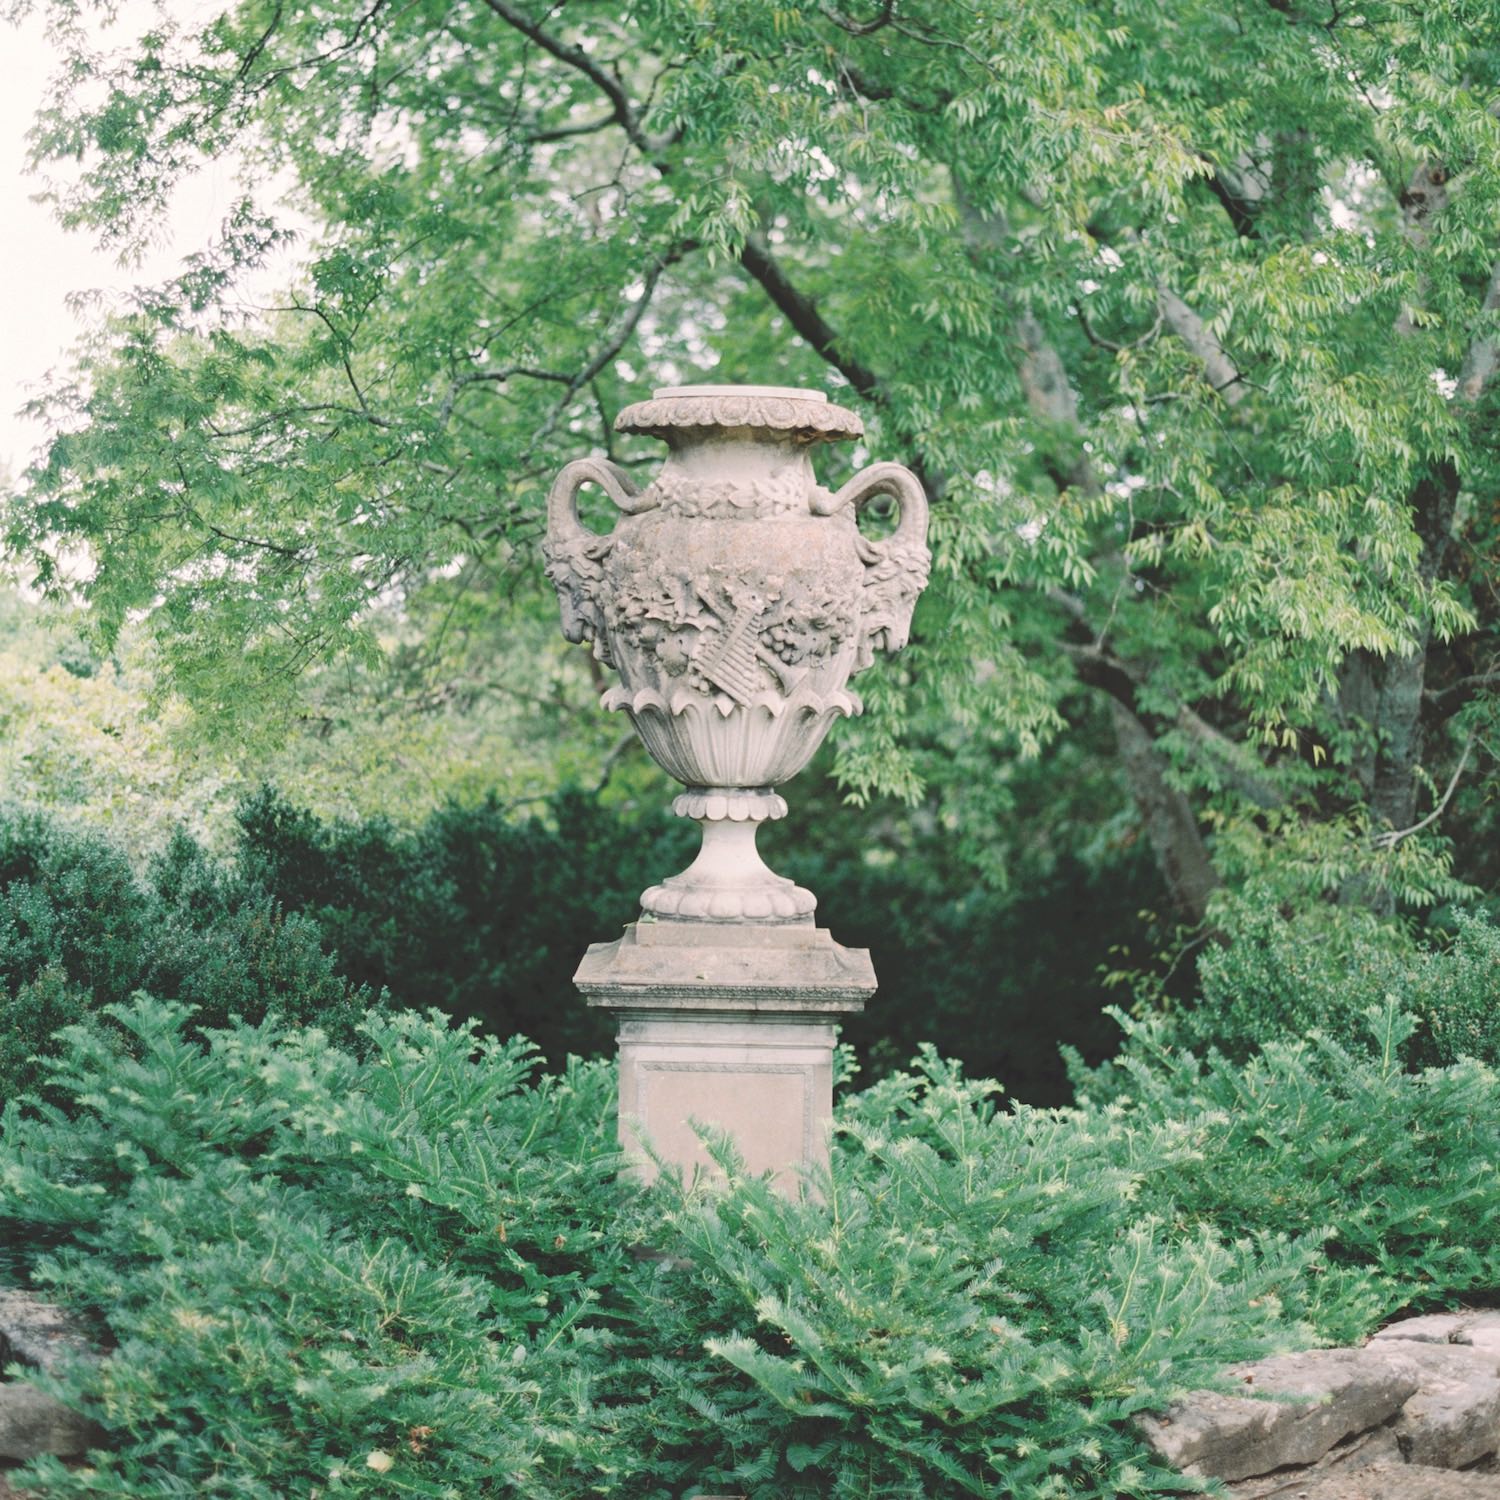 Ornate urn standing on pedestal among the greenery at Cheekwood